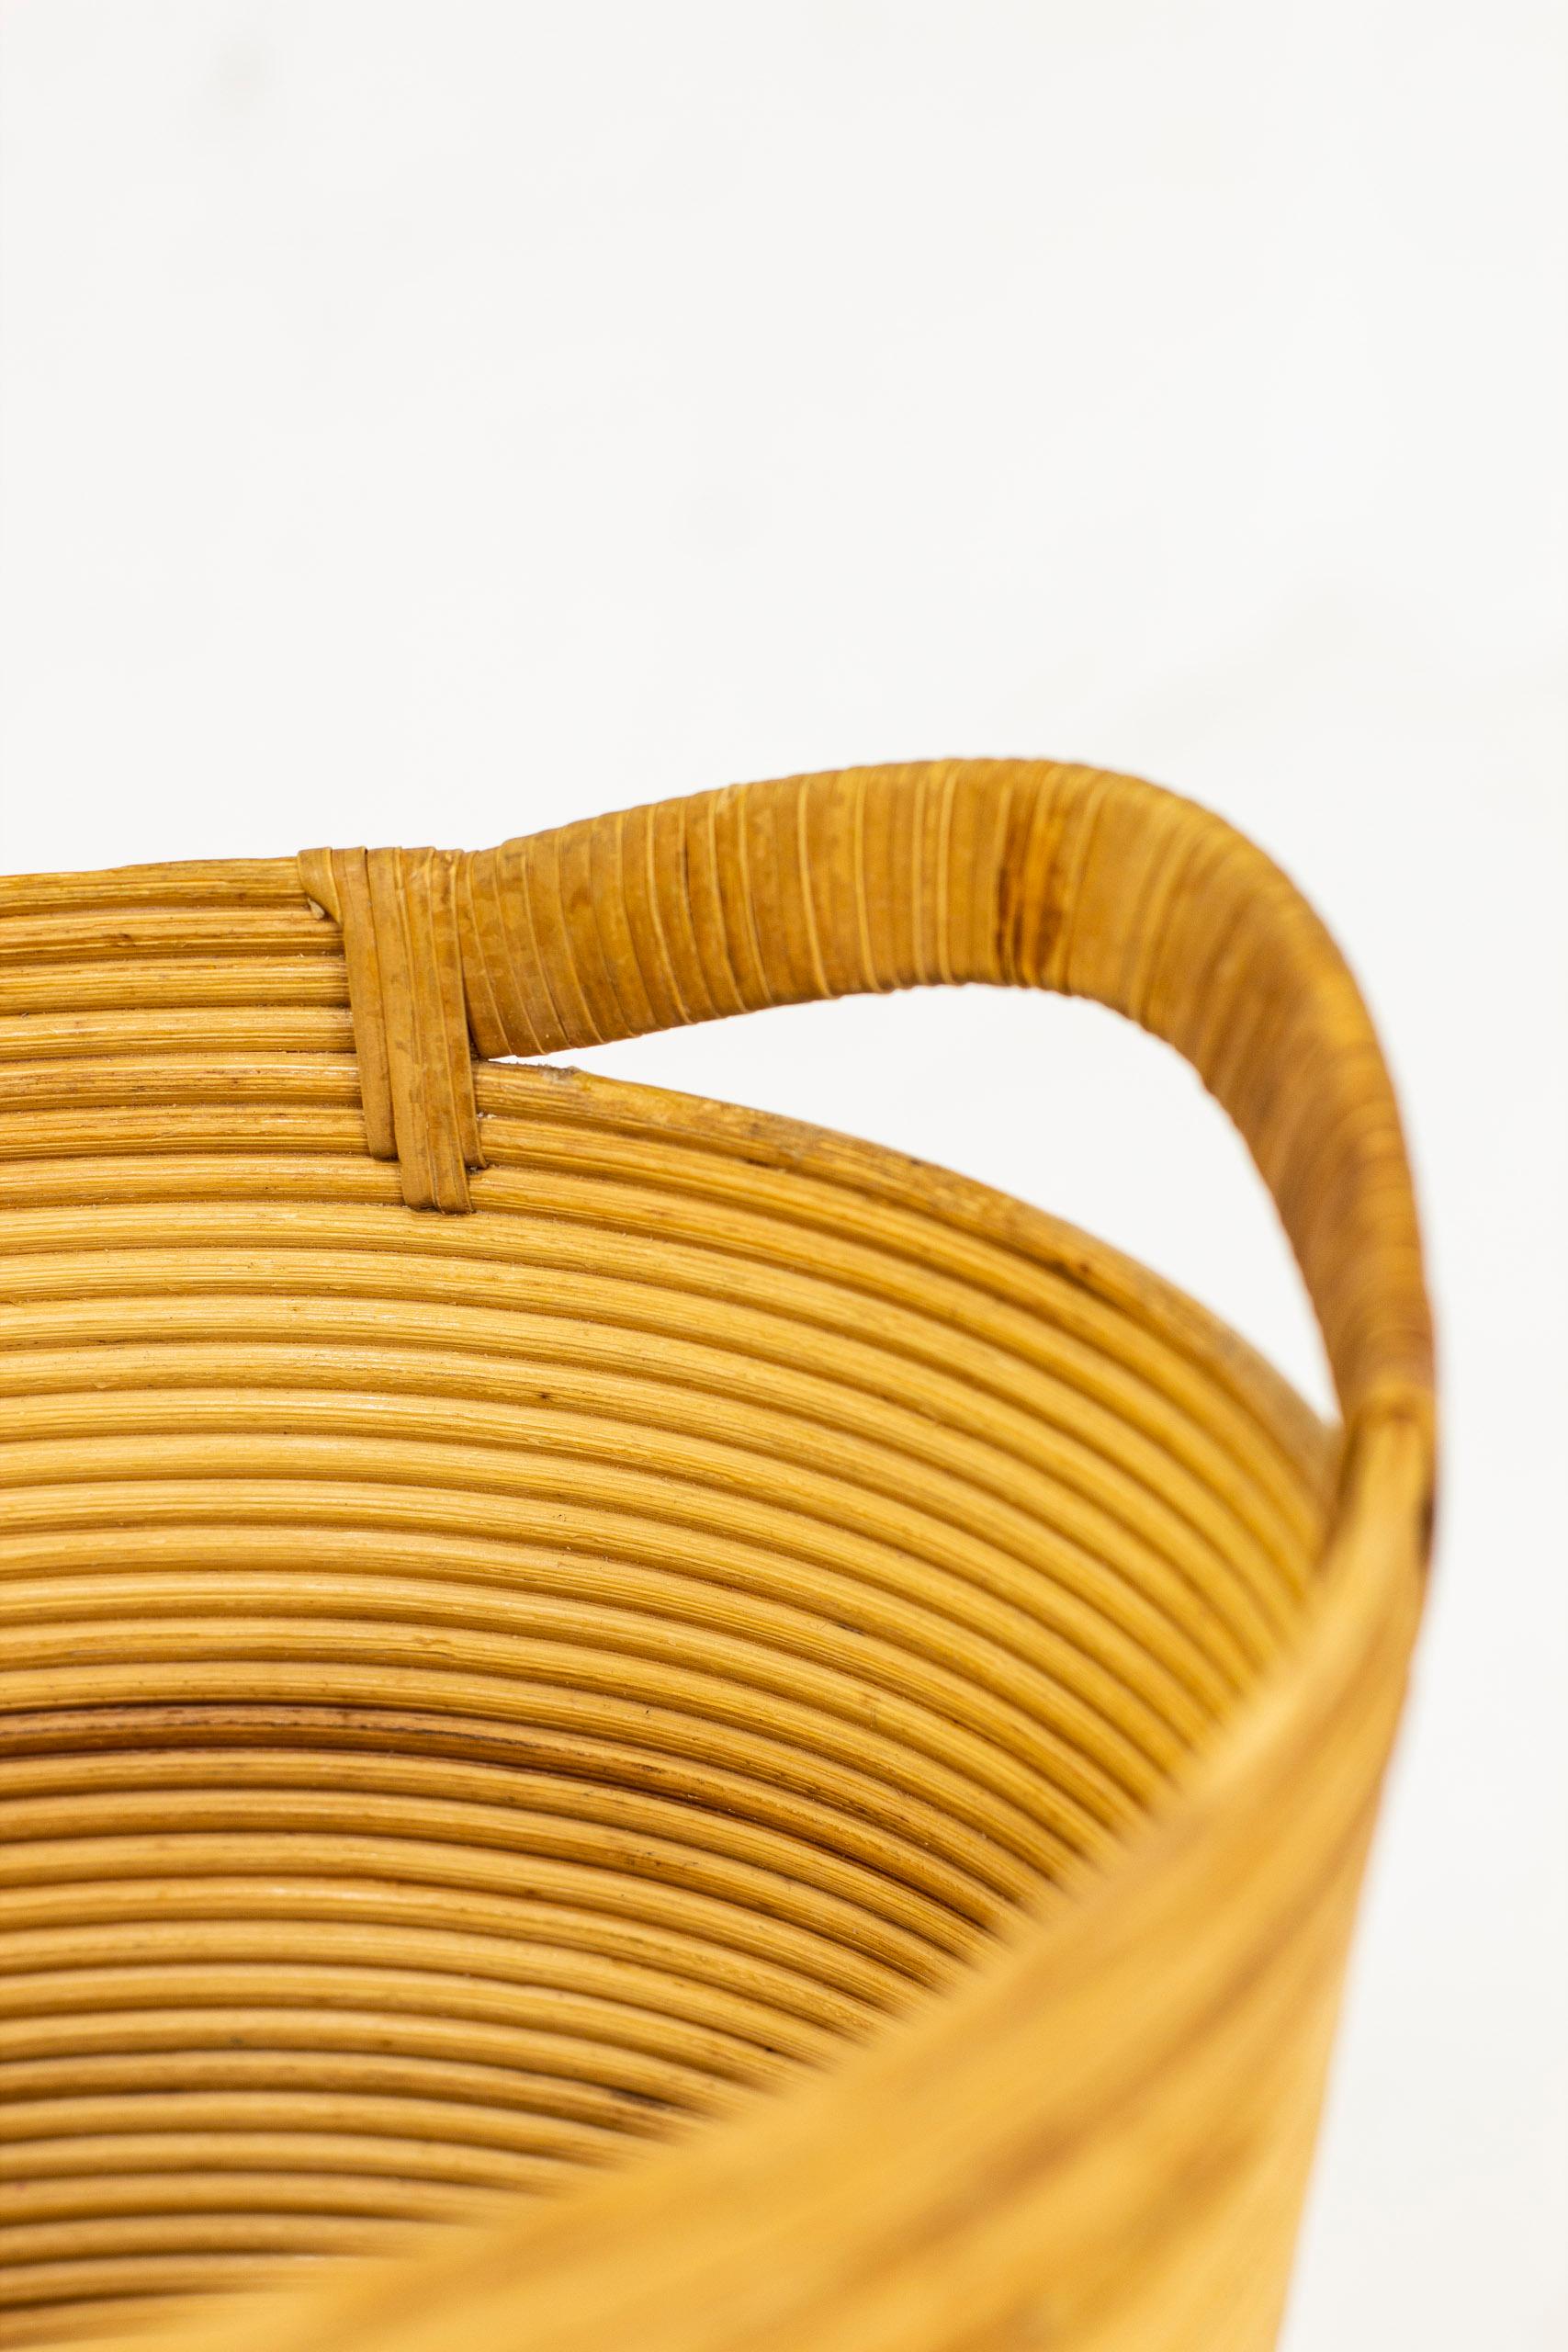 Scandinavian Modern Papper Basket Designed and Manufactured by Laurids Lønborg in Denmark, 1950s For Sale